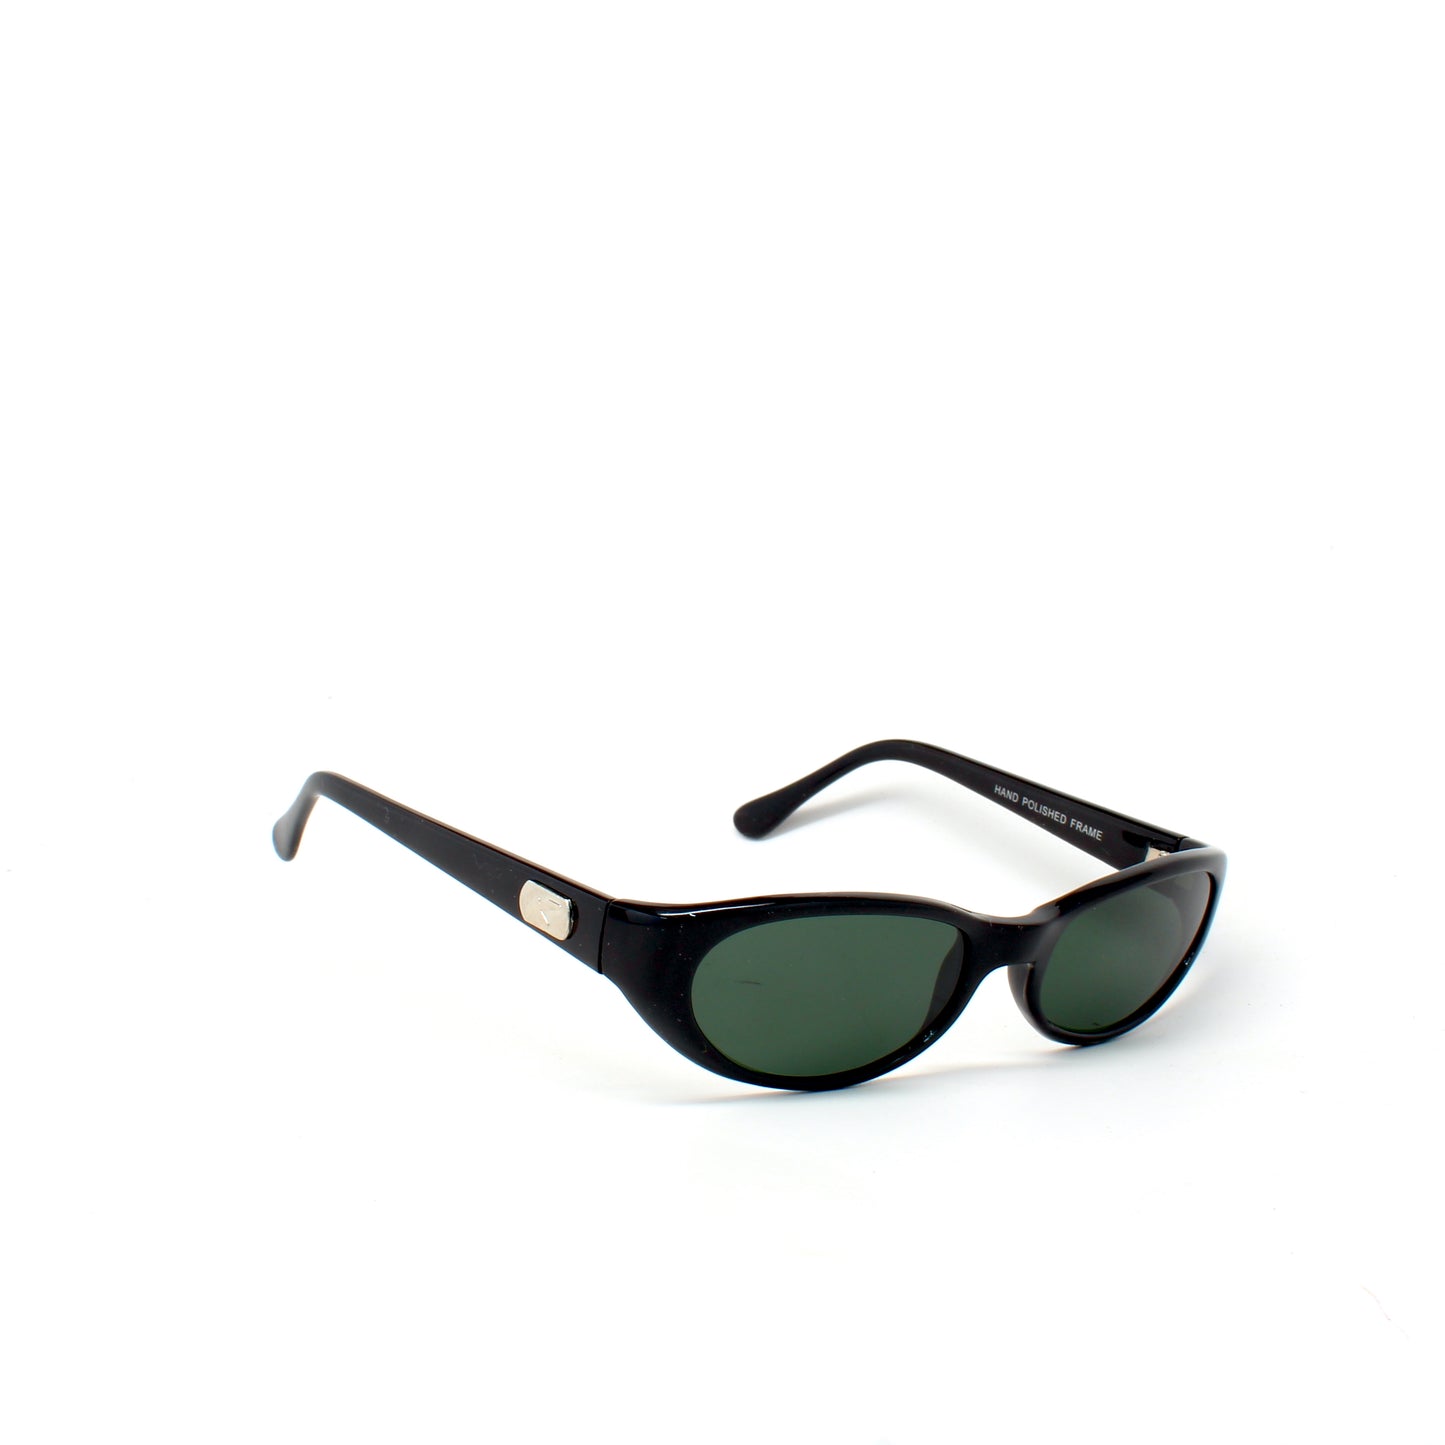 Vintage Small Size 90s Elaine Mod Oval Shaped Sunglasses- Black